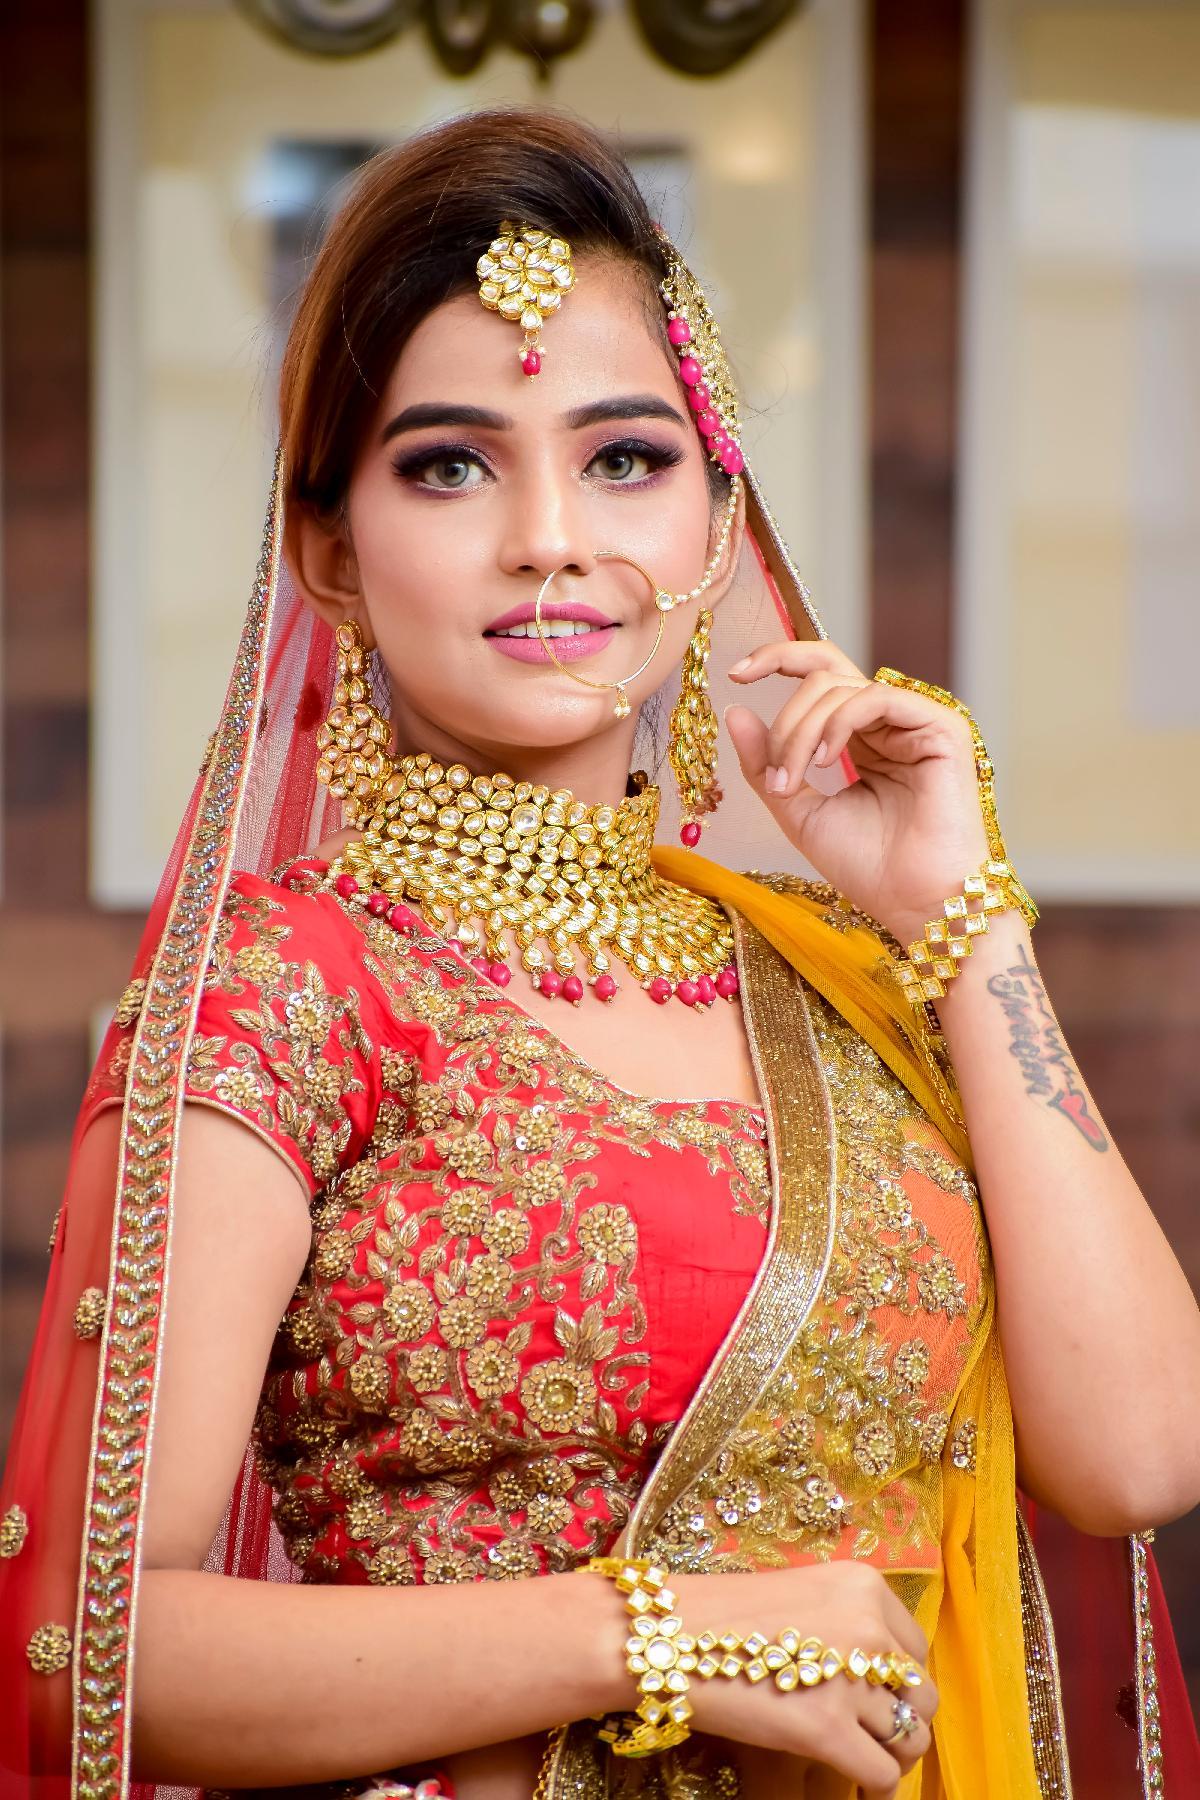 Orange bridal lehenga with green jewellery for exquisite wedding – The Odd  Onee #indianbridaldress #pakistanibridaloutfit